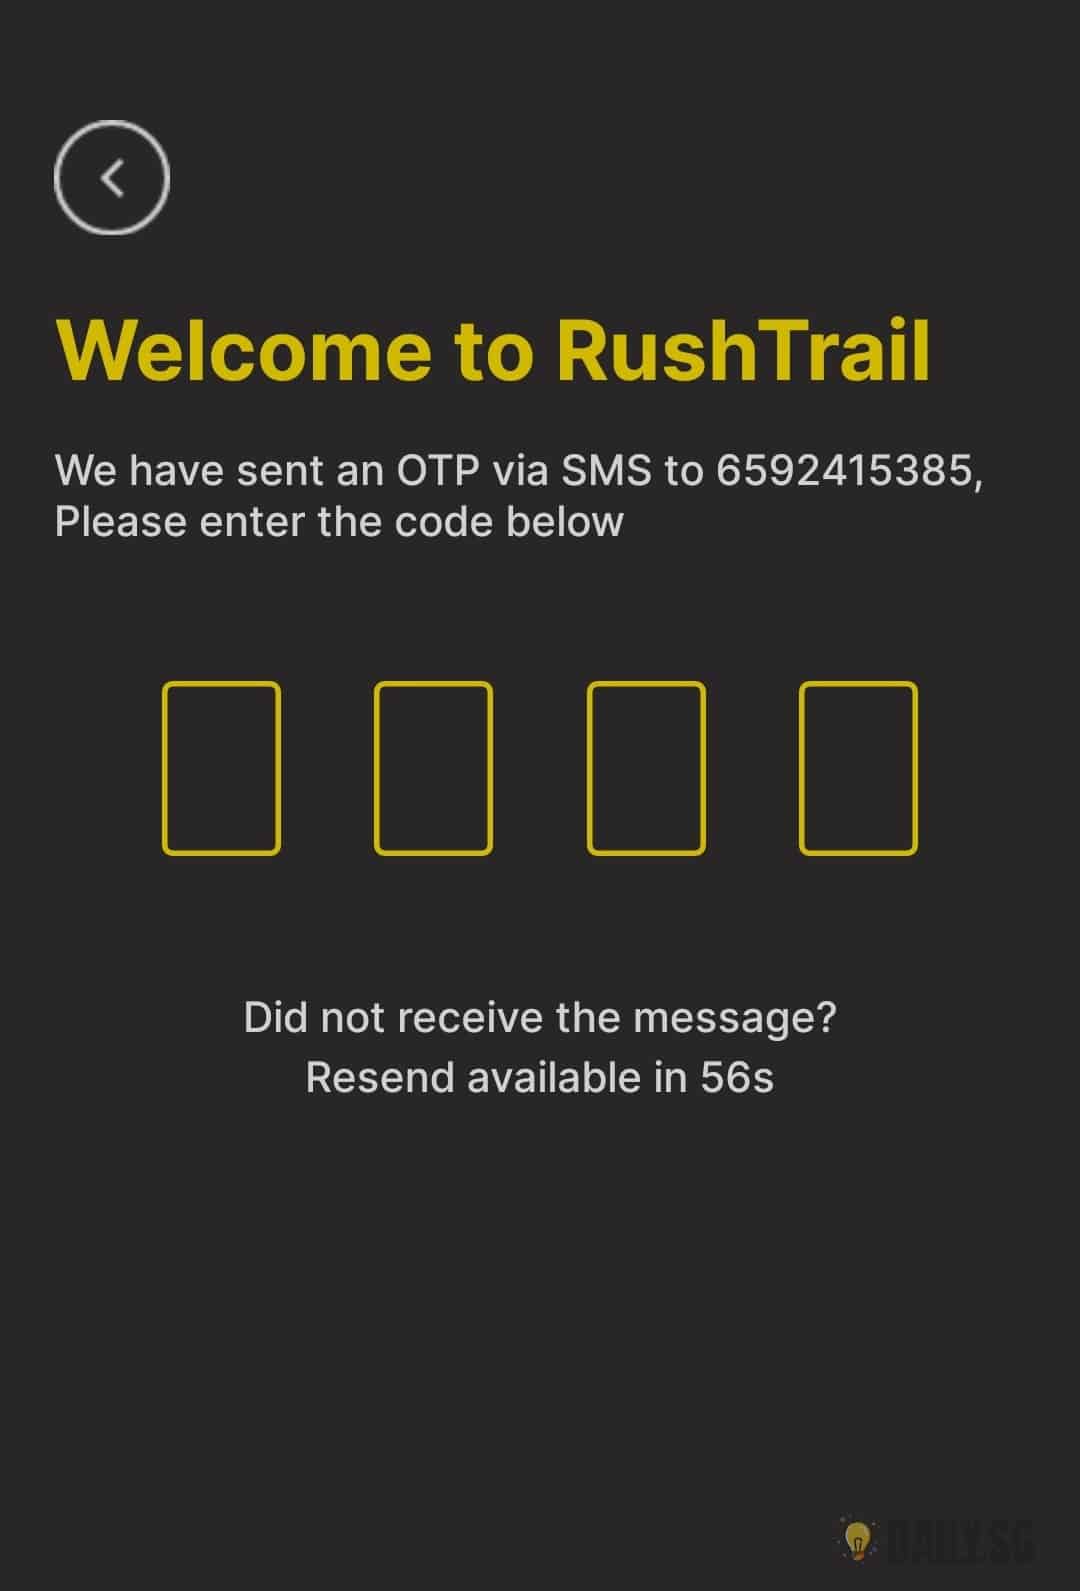 RushTrail - 第 2 步 OTP